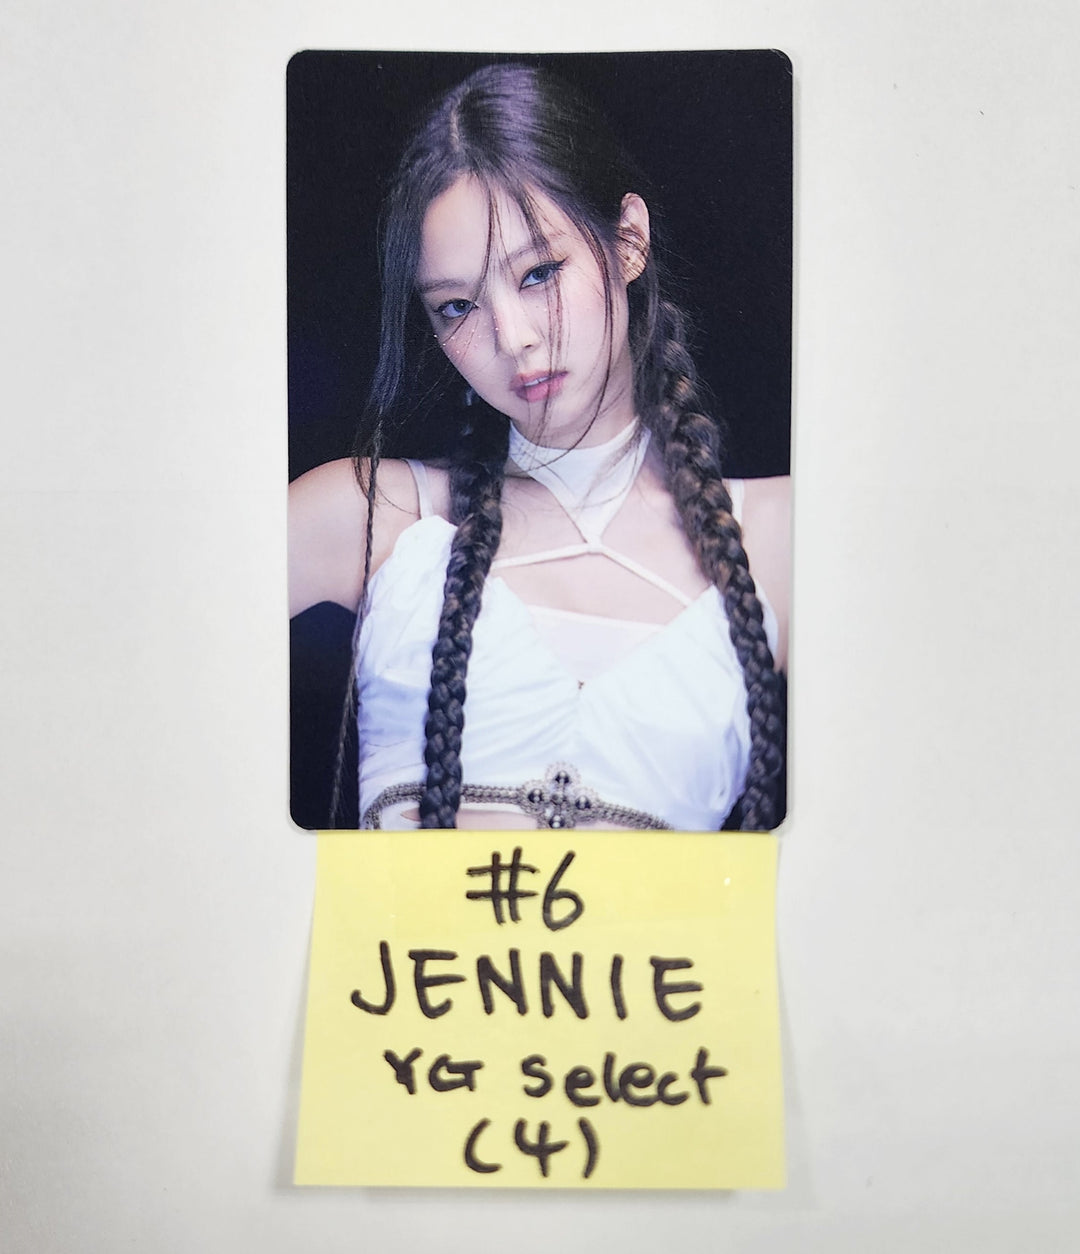 BLACK PINK "Born Pink" - YG Select Pre-Order Benefit Photocard [Updated 10/14]